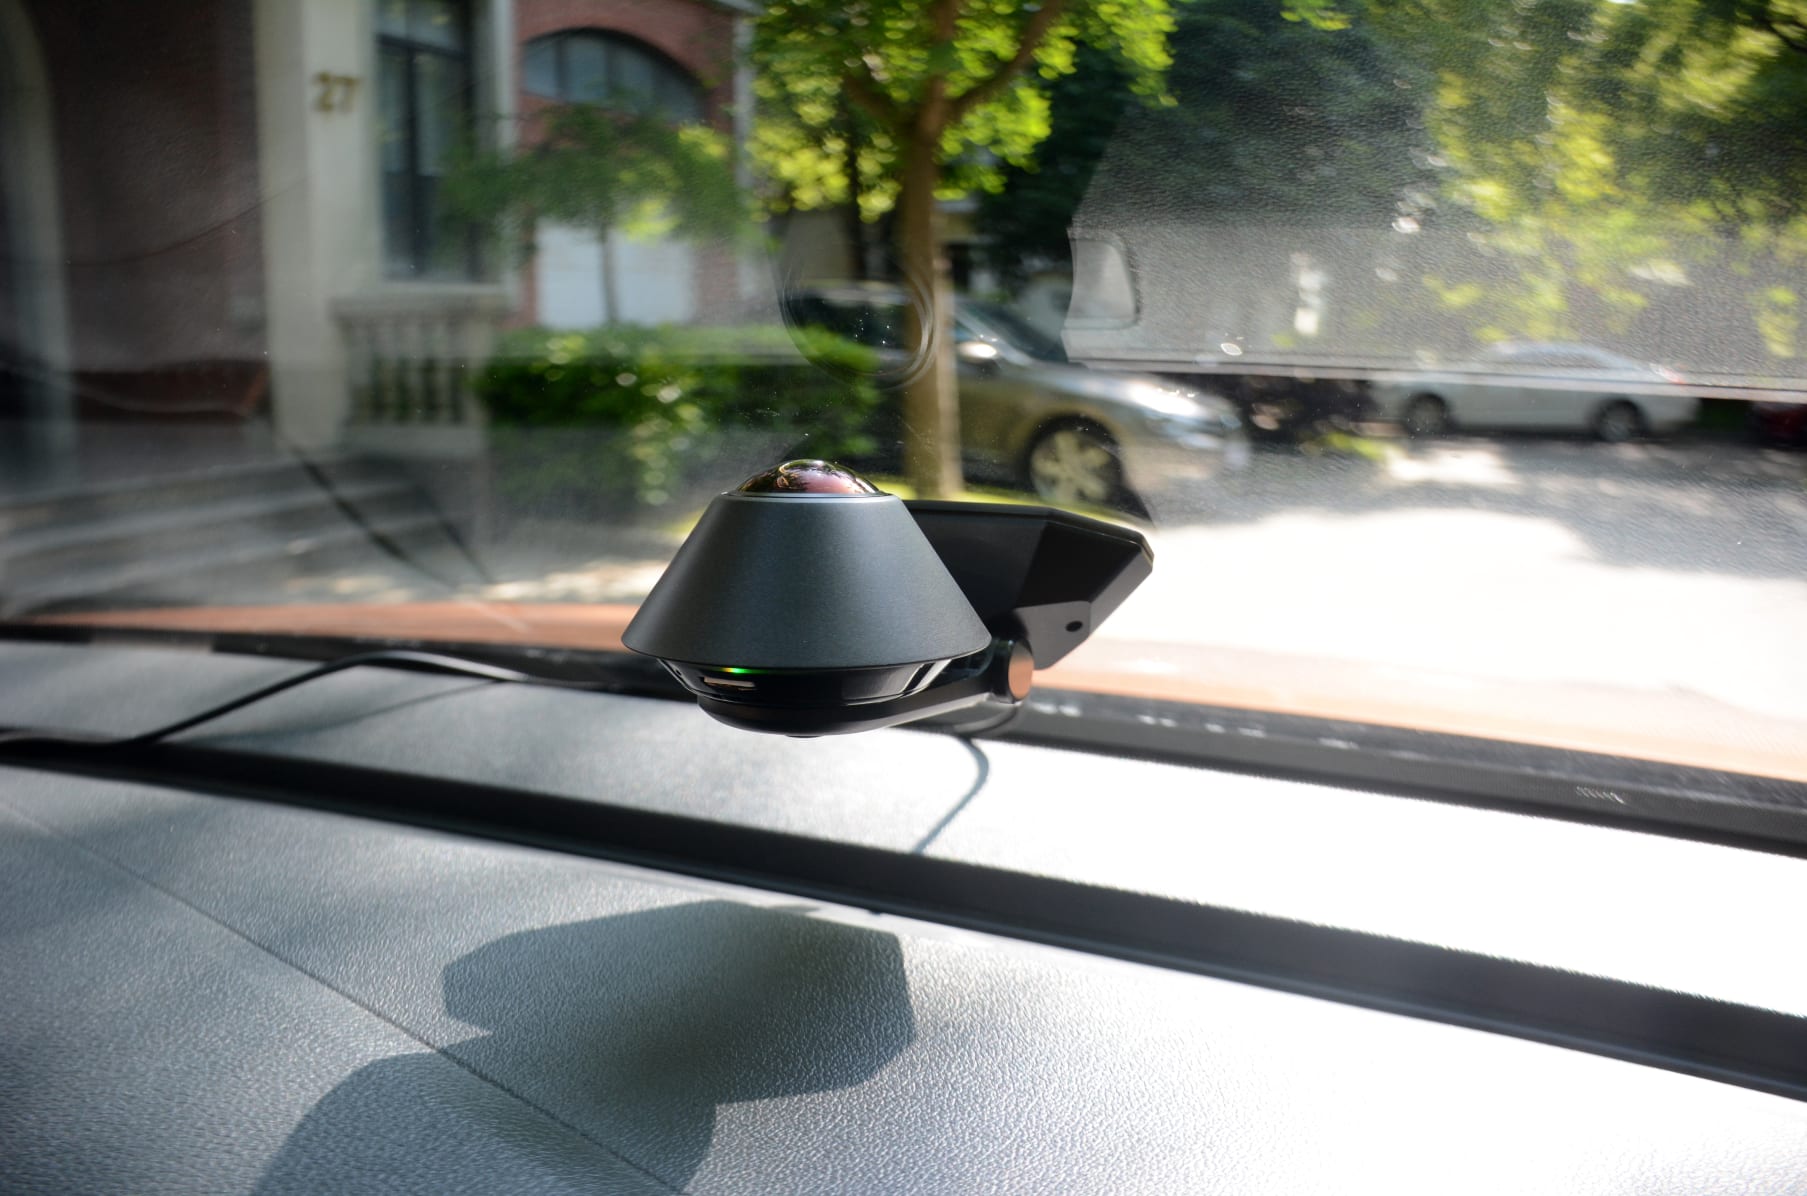 Waylens Secure360 4G - Automotive Security Camera | Indiegogo